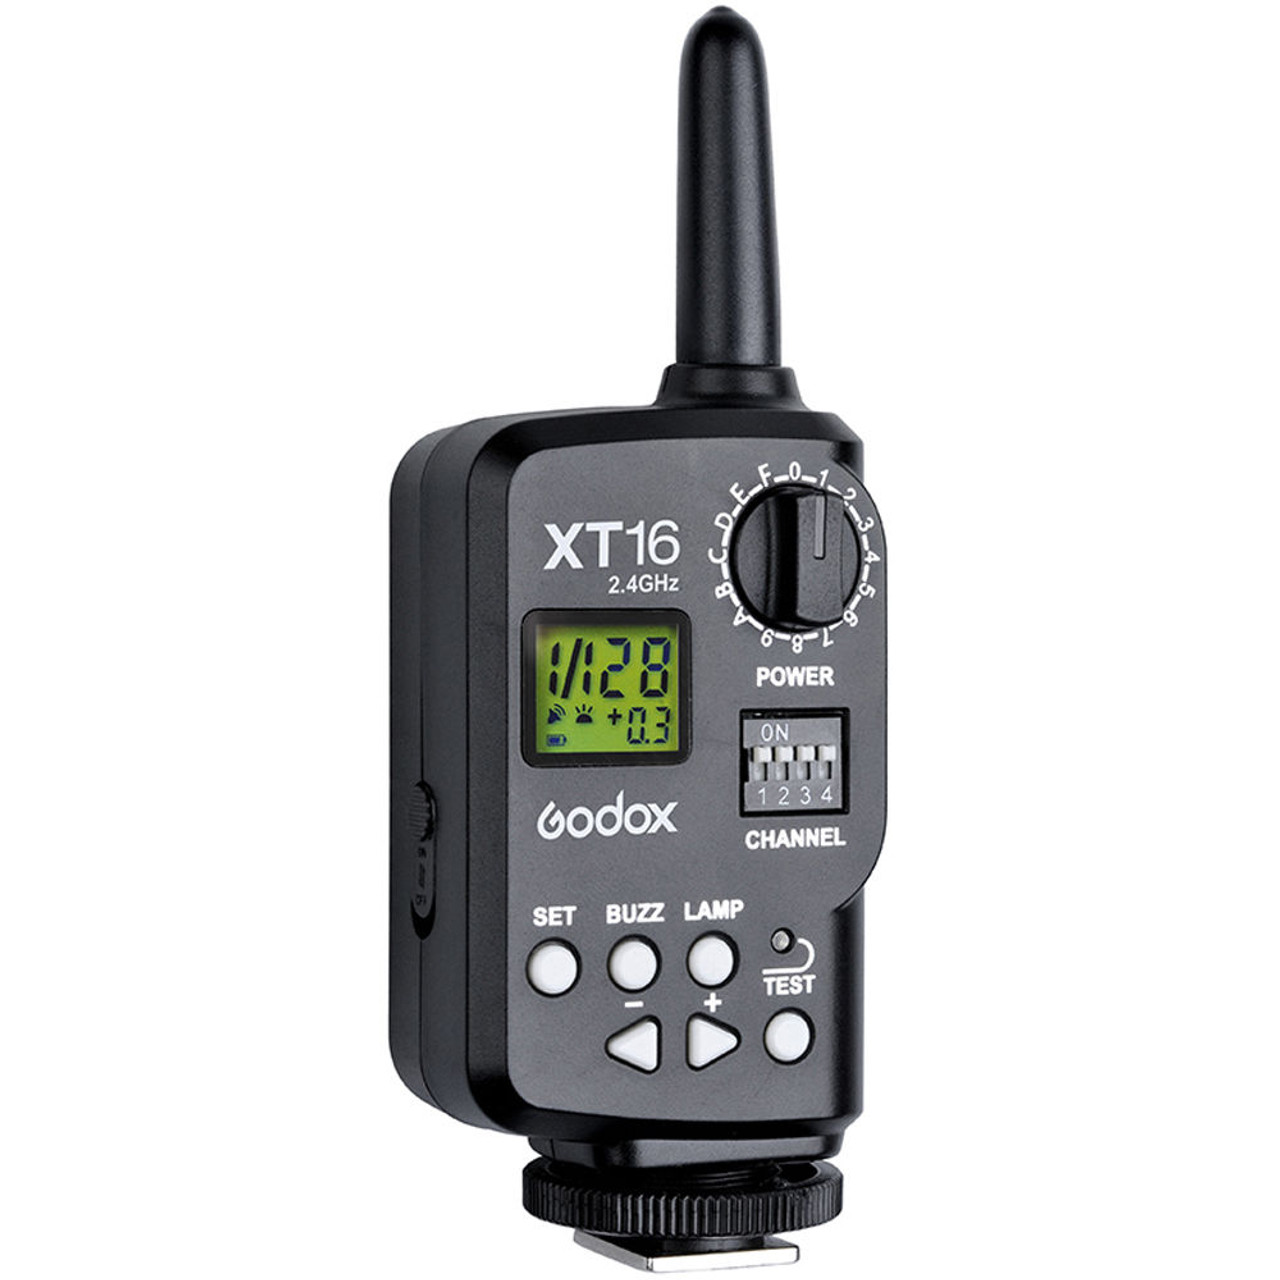 Godox XT-16 2.4G Wireless Power Control Flash Trigger Only